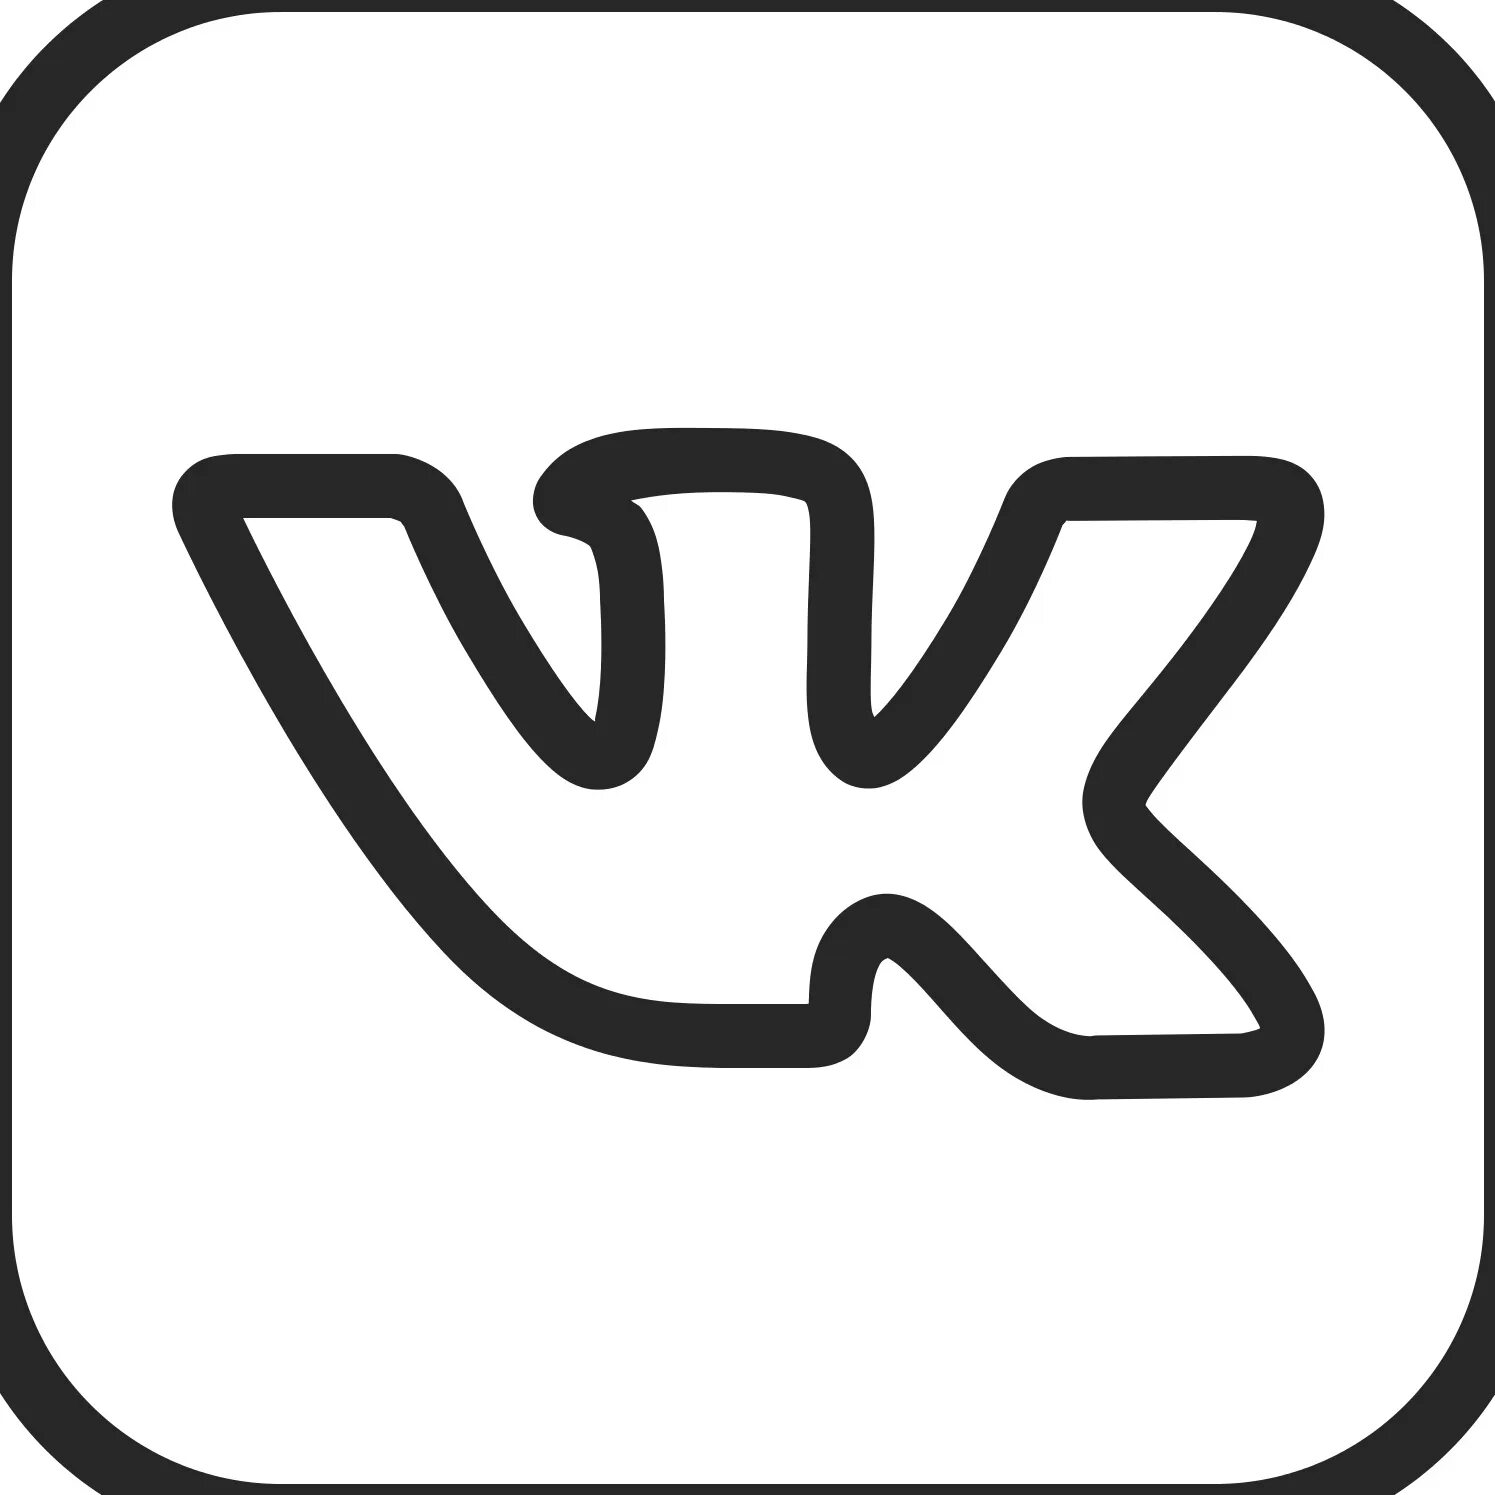 Vk com thetimeofrussia03. Значок ВК. Значок Вики. OBK логотип. Значок ВК белый.